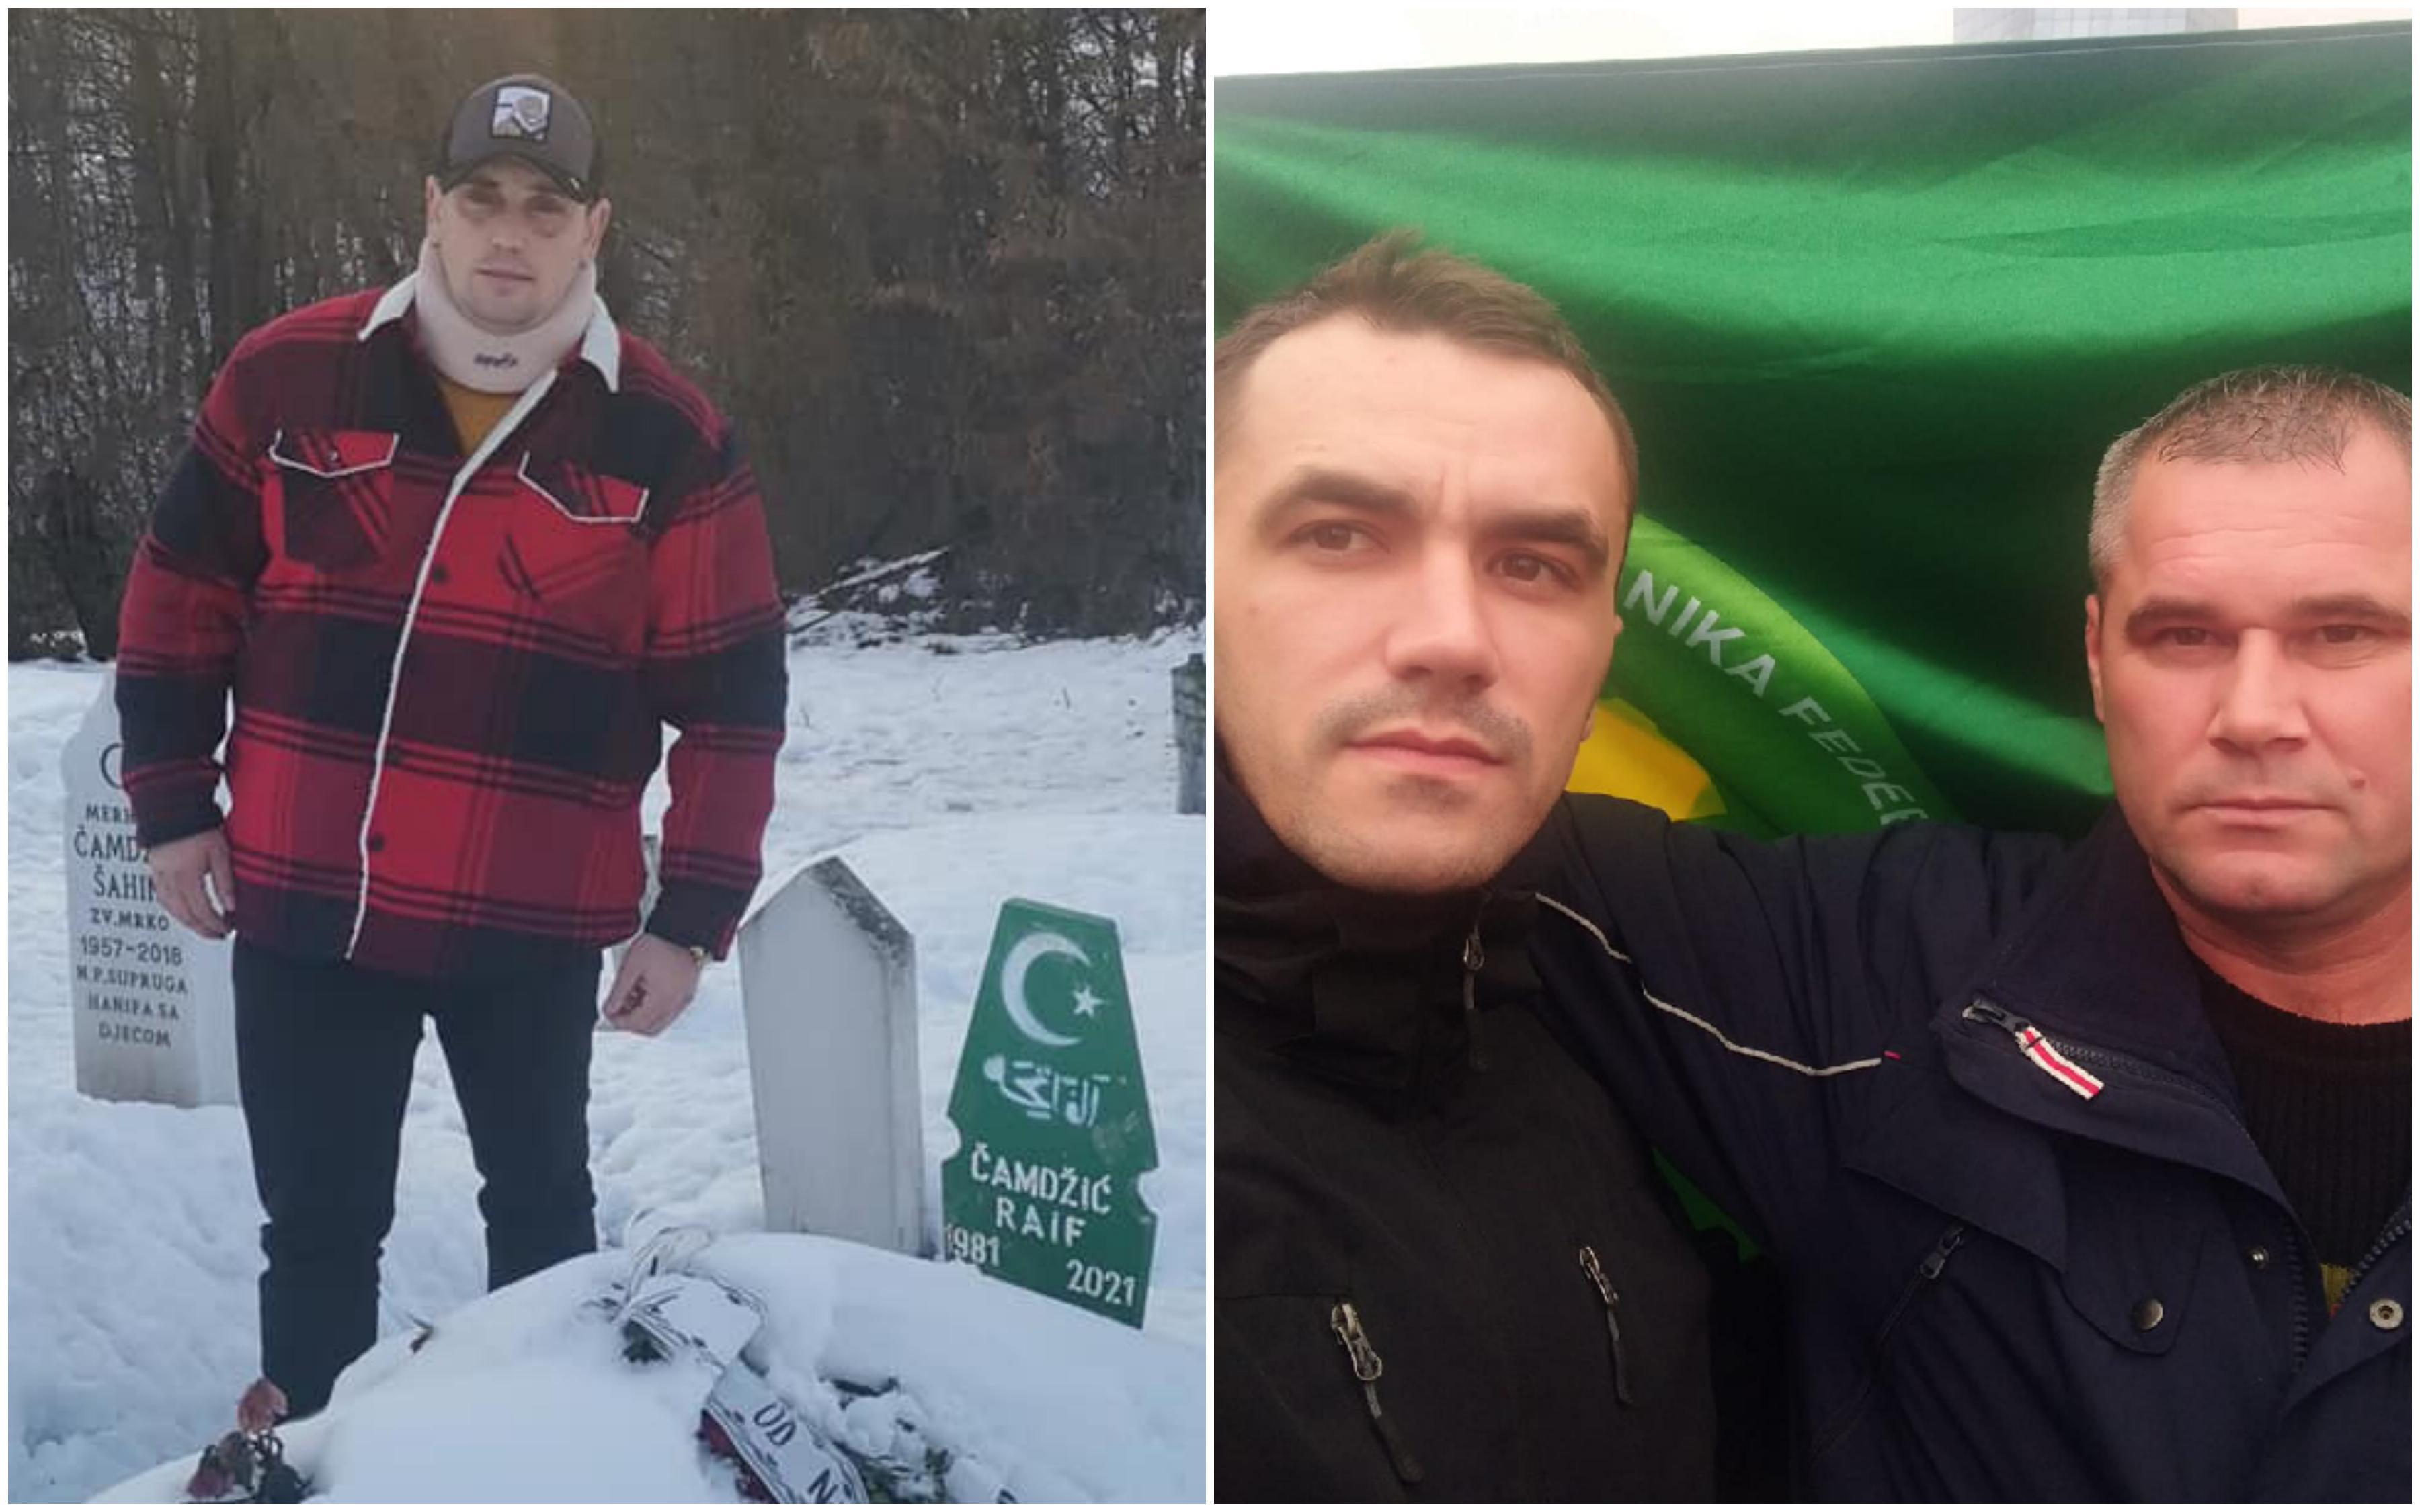 Povrijeđeni rudar Hasan Kadirić i Esmer Buševac s nastradalim Raifom Čamdžićem - Avaz